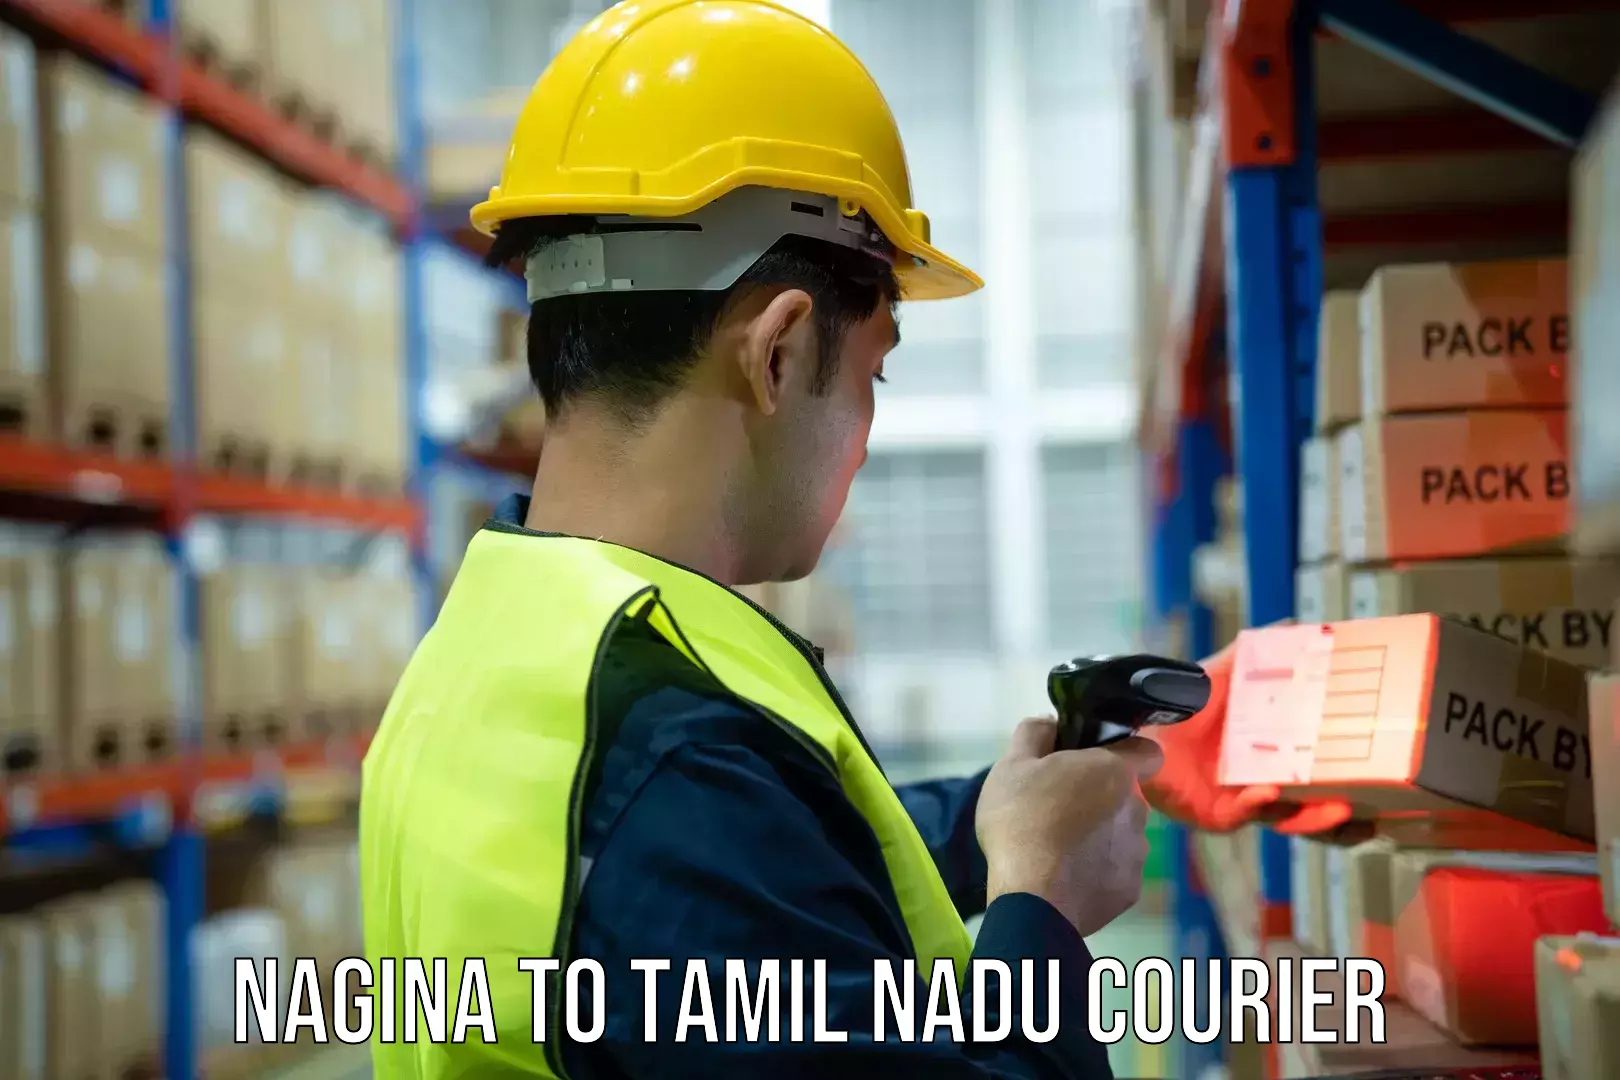 Fast delivery service Nagina to Tamil Nadu